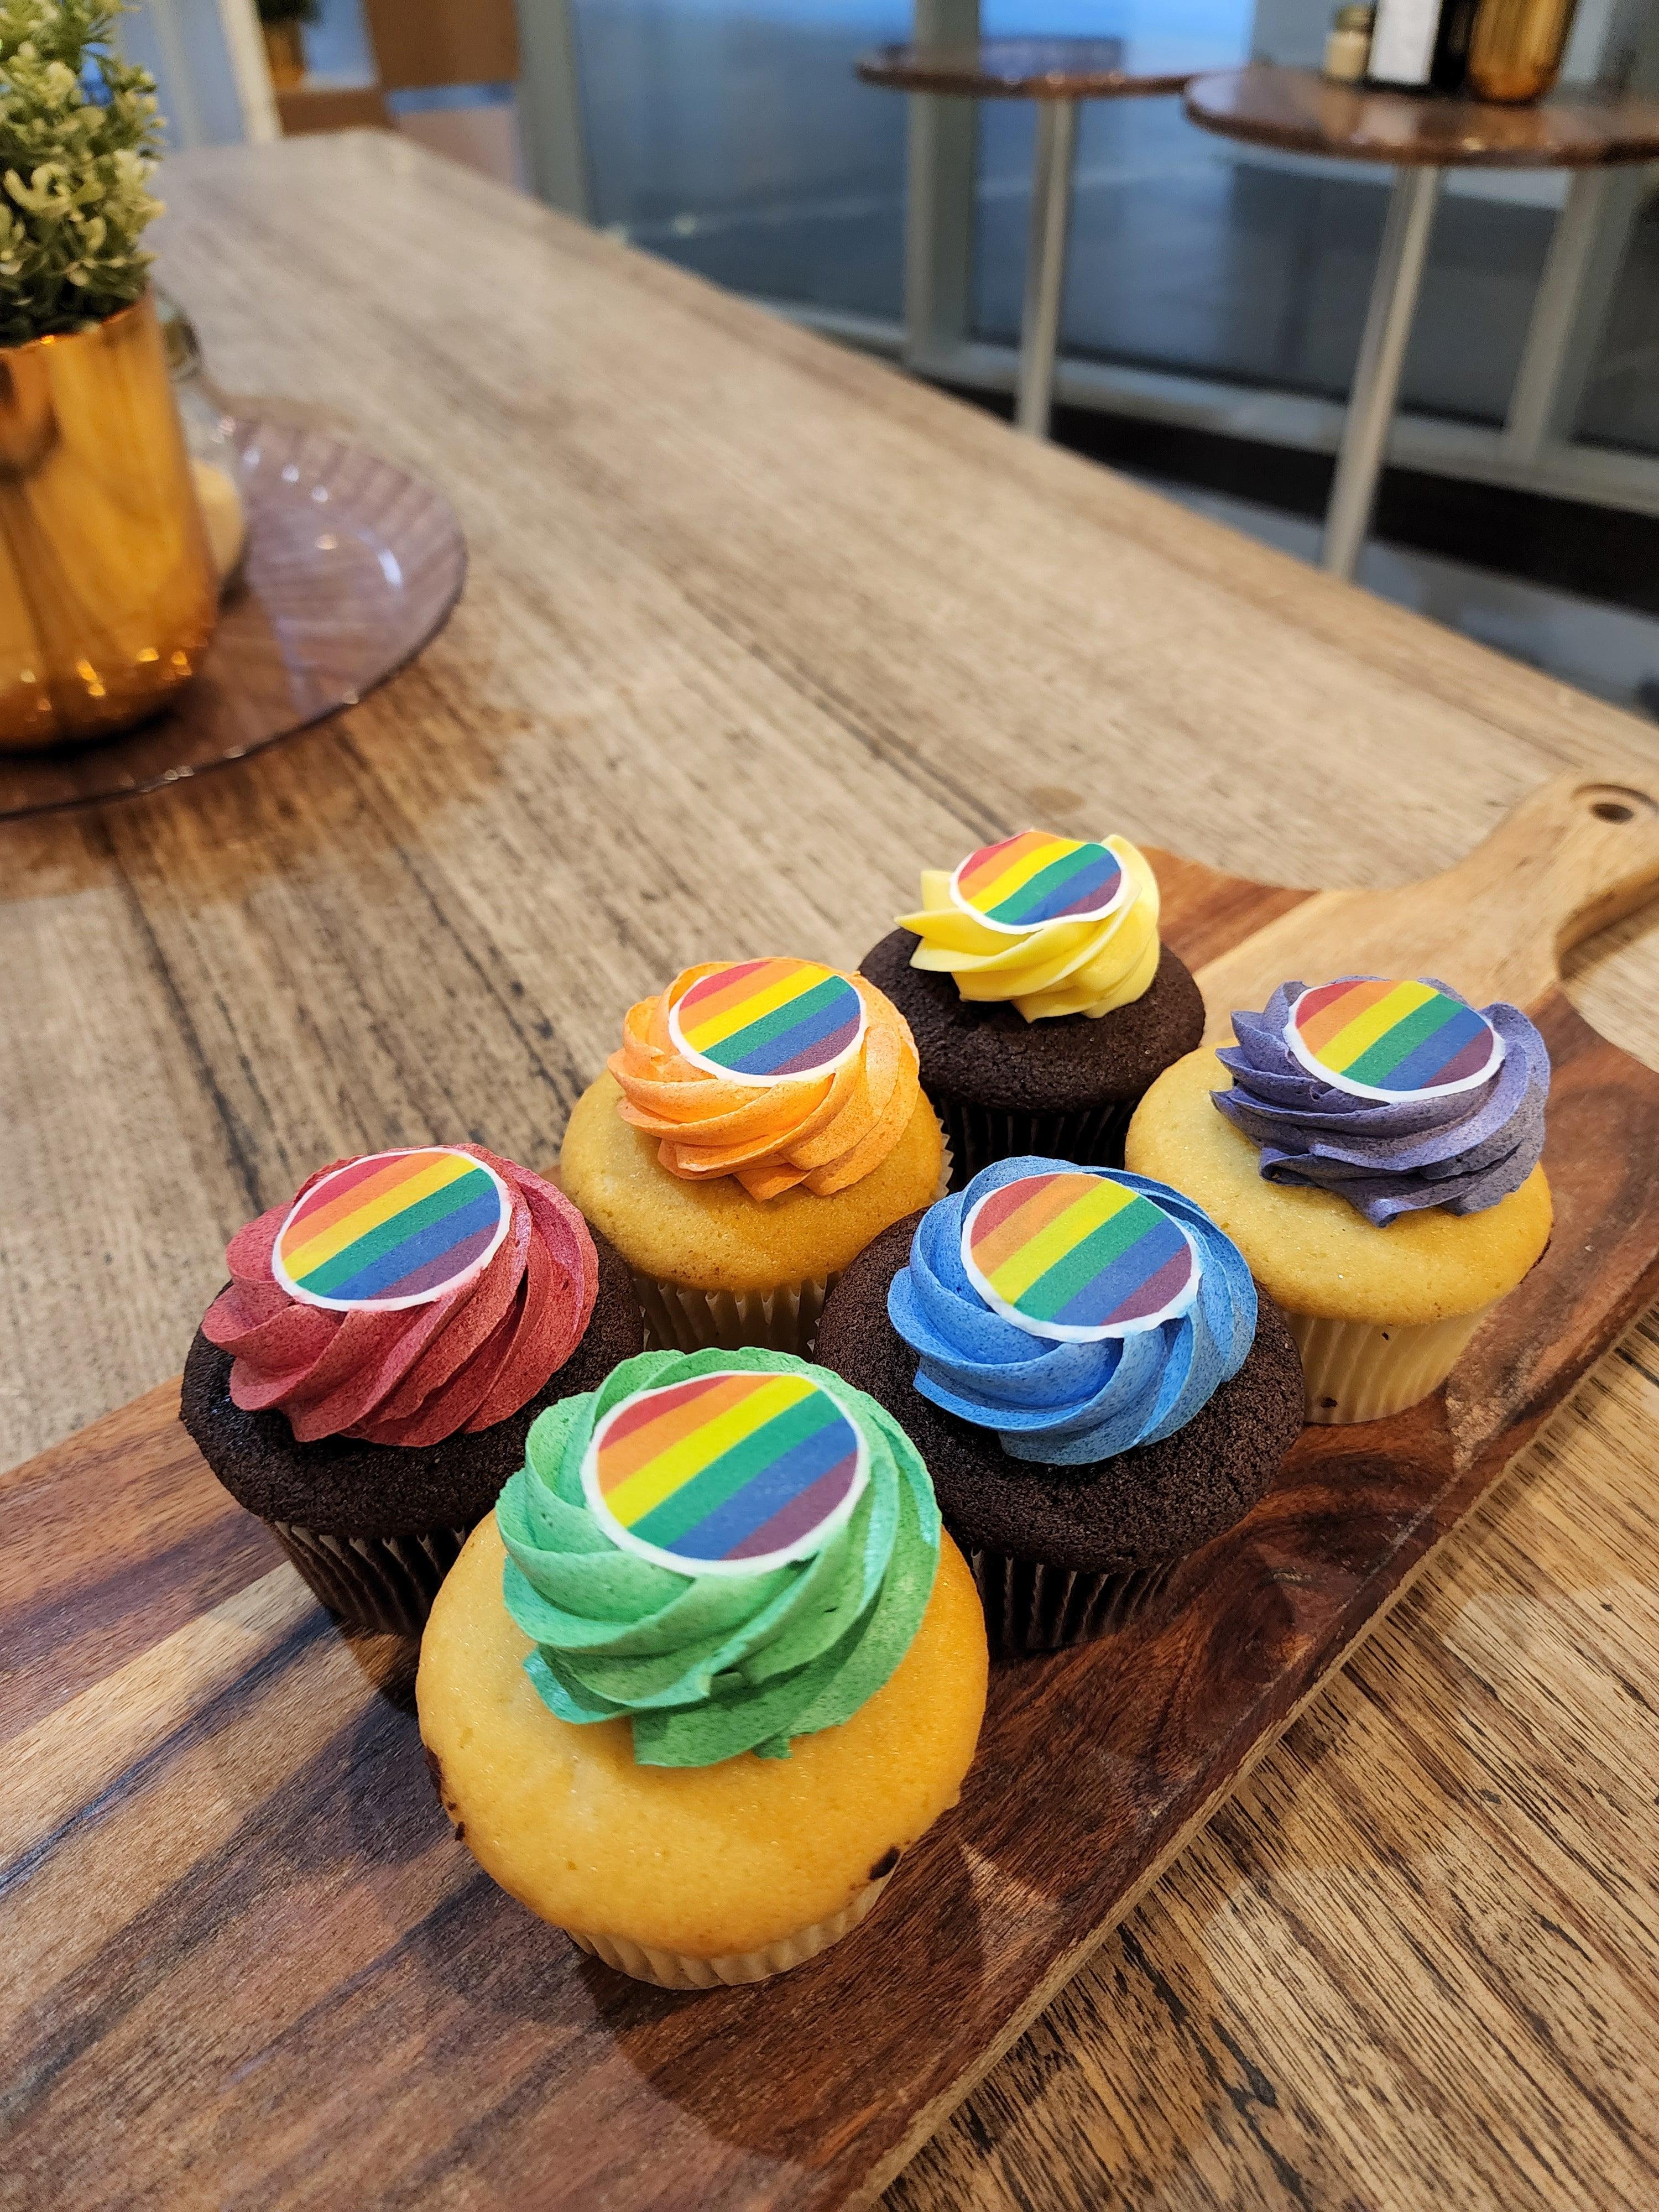 Rainbow/PRIDE Cupcakes - Little Cupcakes